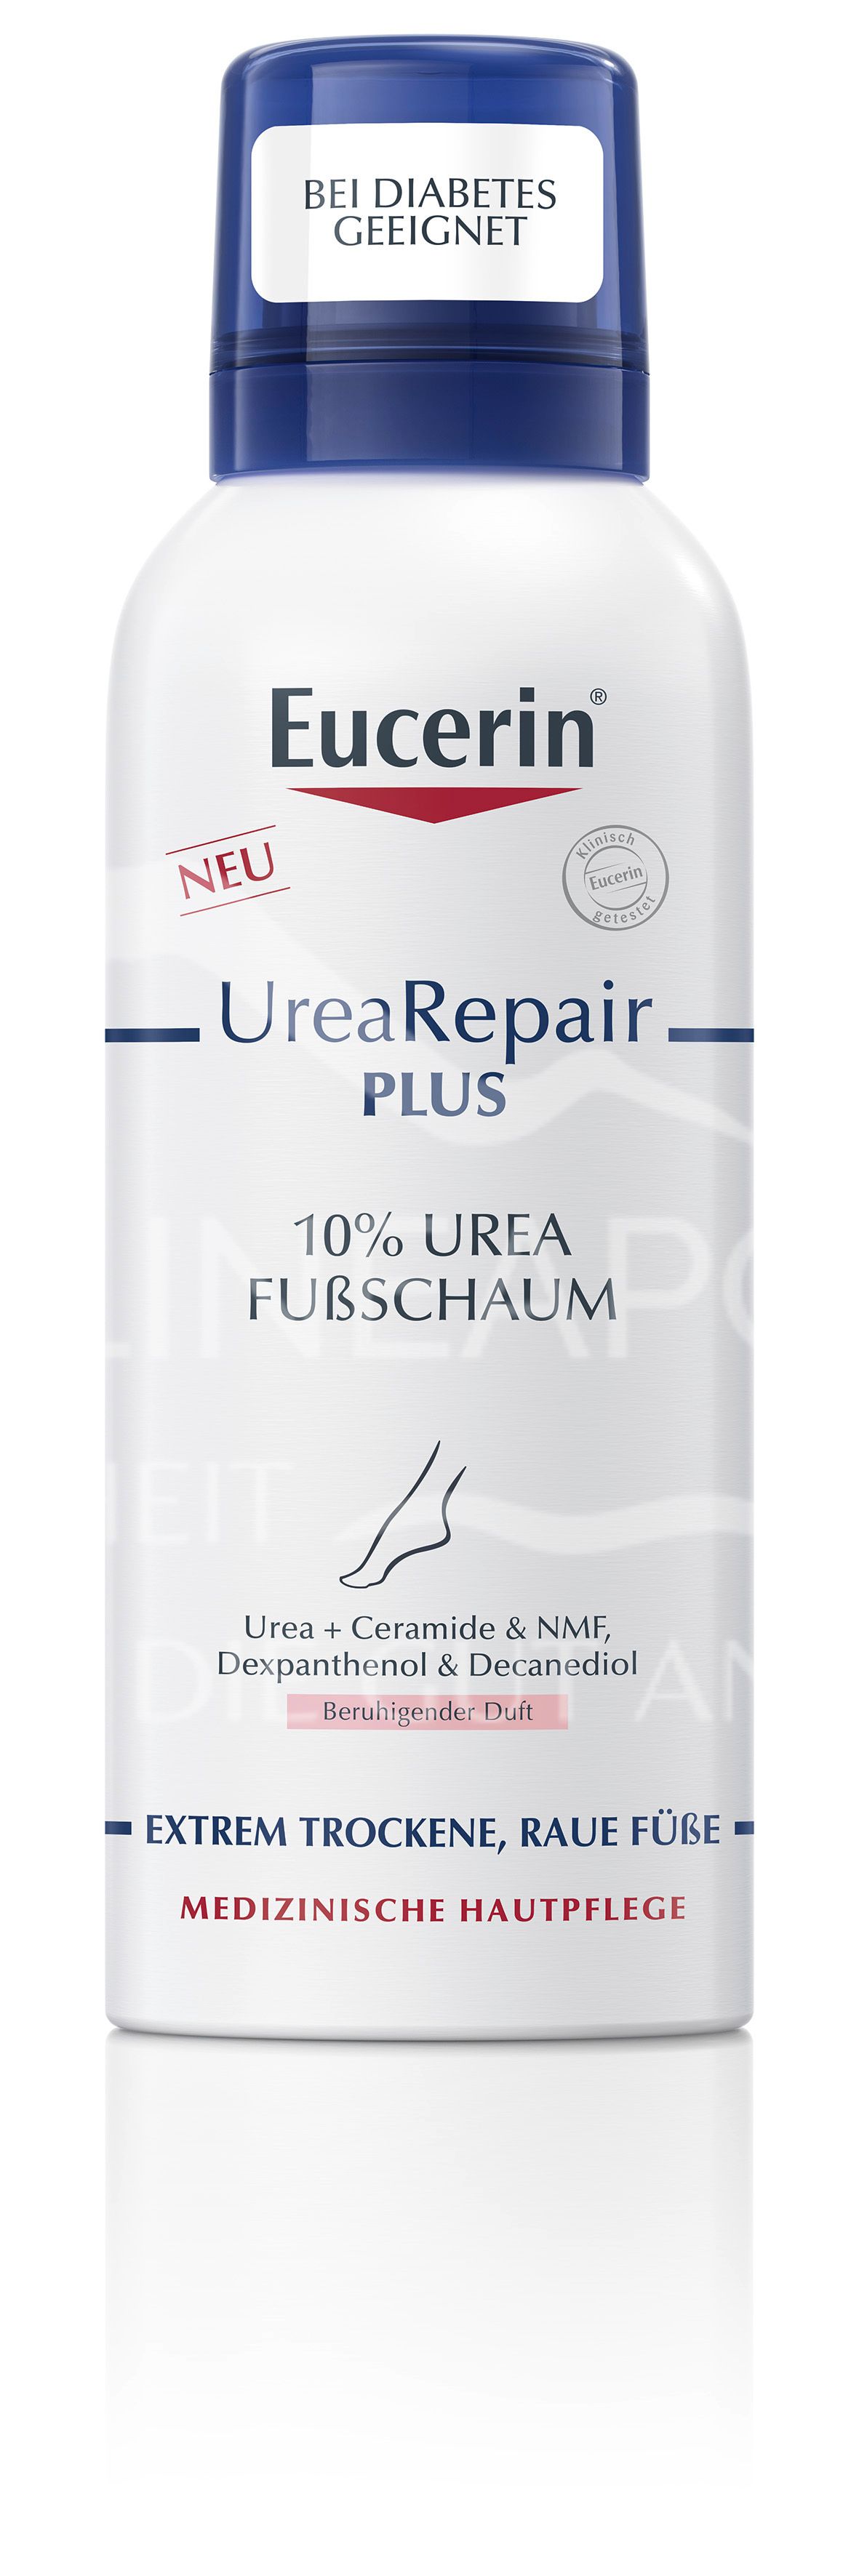 Eucerin® UreaRepair PLUS Fußschaum 10%